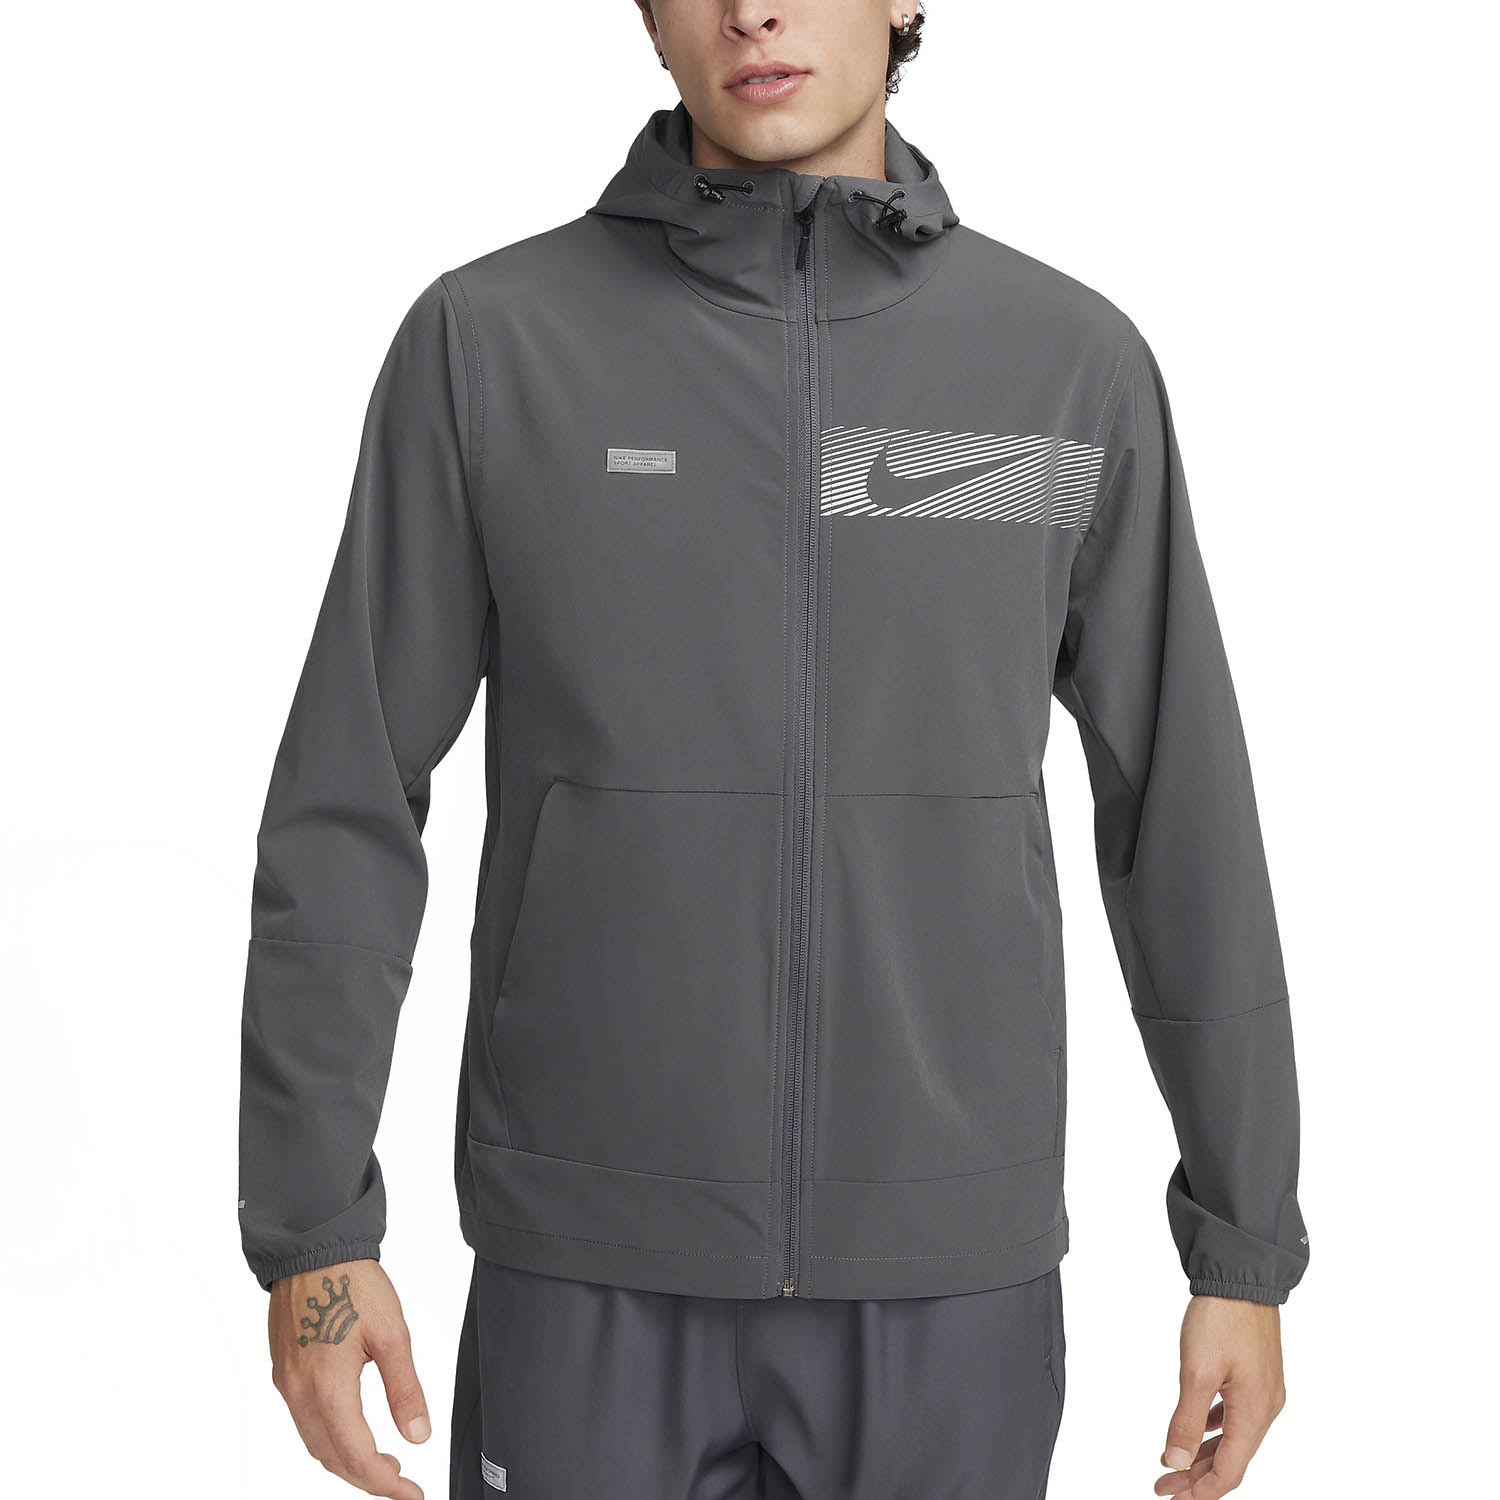 Nike Unlimited Flash Jacket - Iron Grey/Reflective Silver